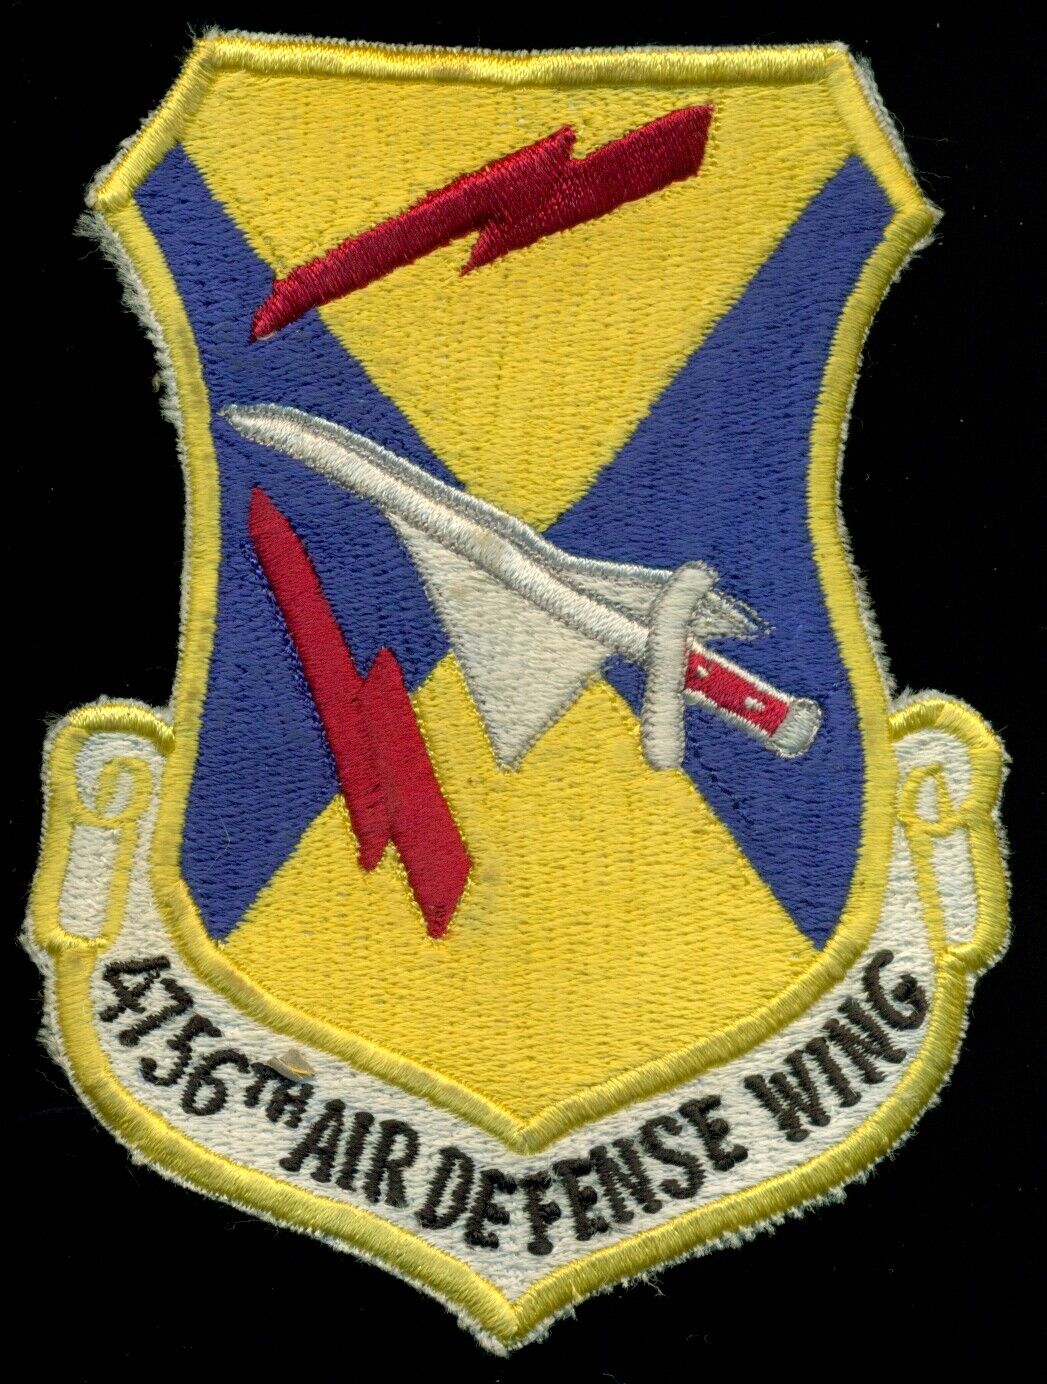 USAF 4756th Air Defense Wing Patch N-27